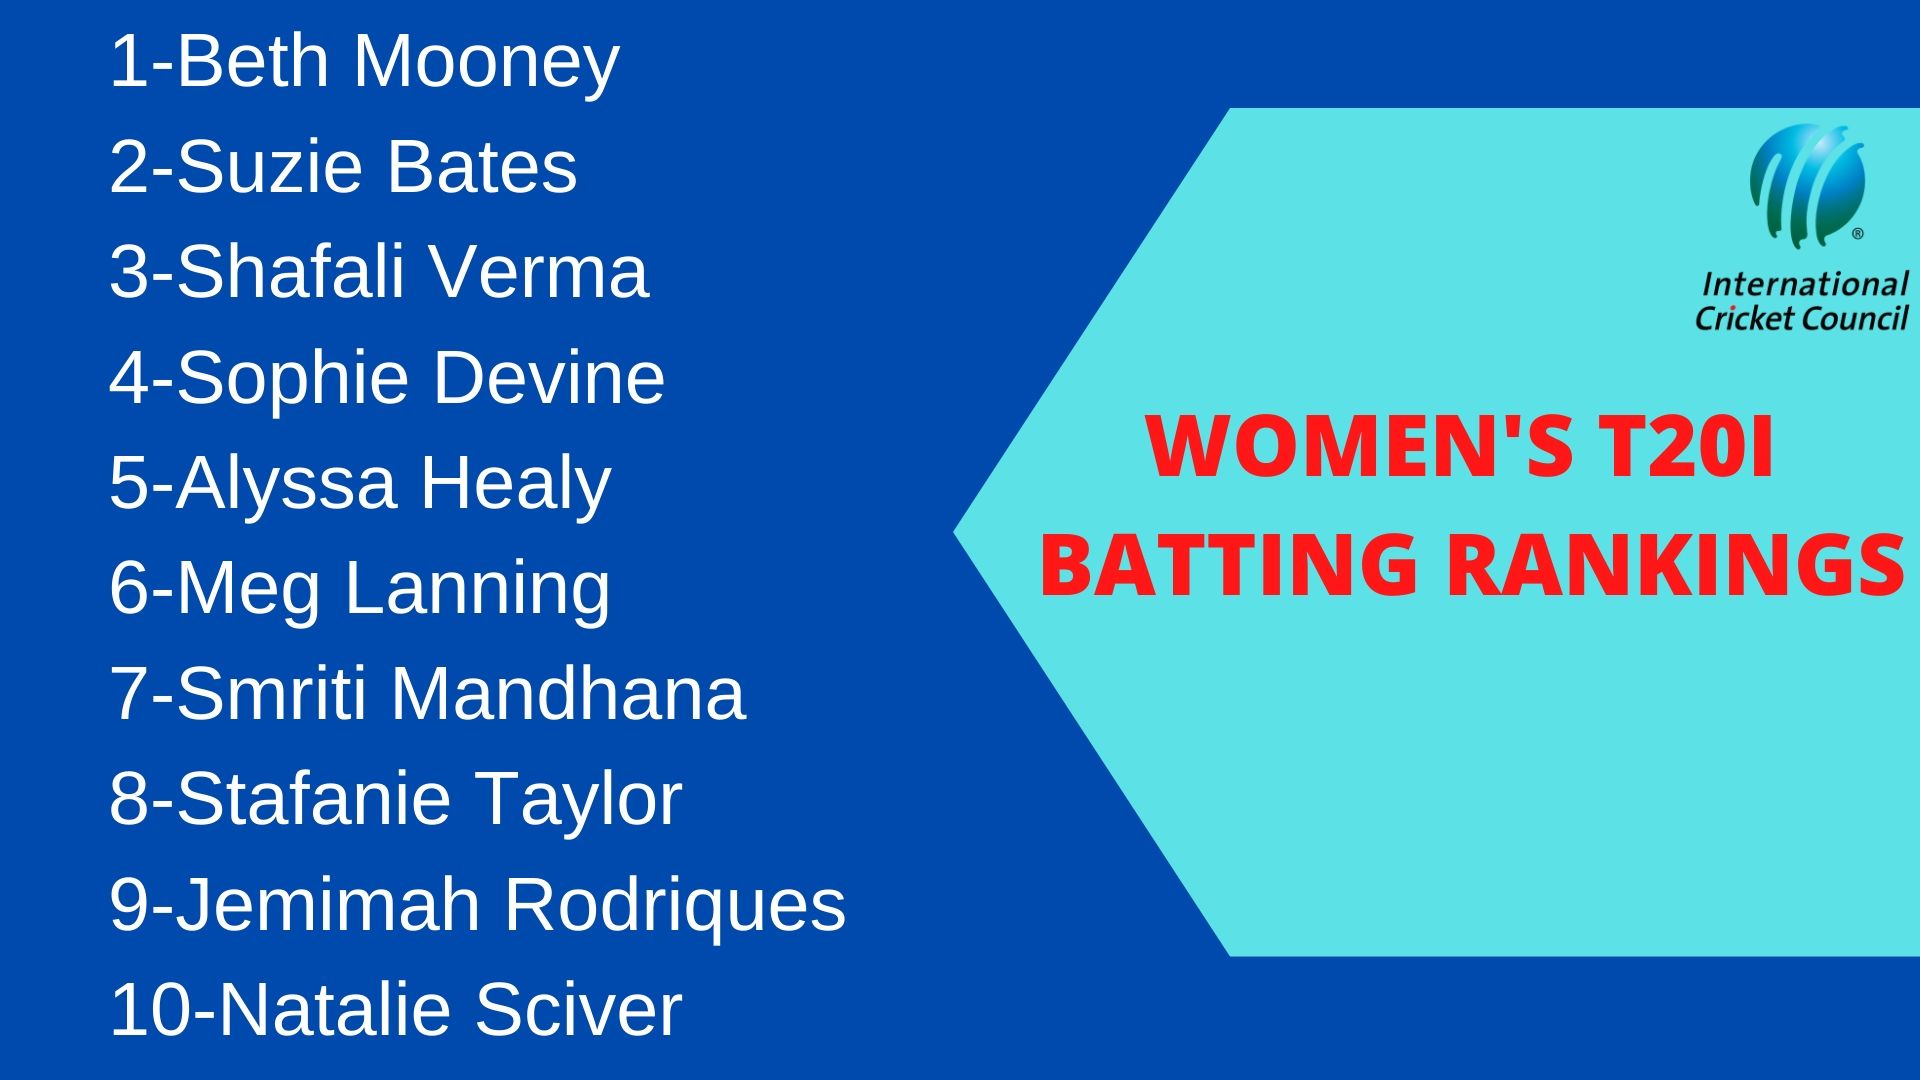 Women's T20I batting rankings.